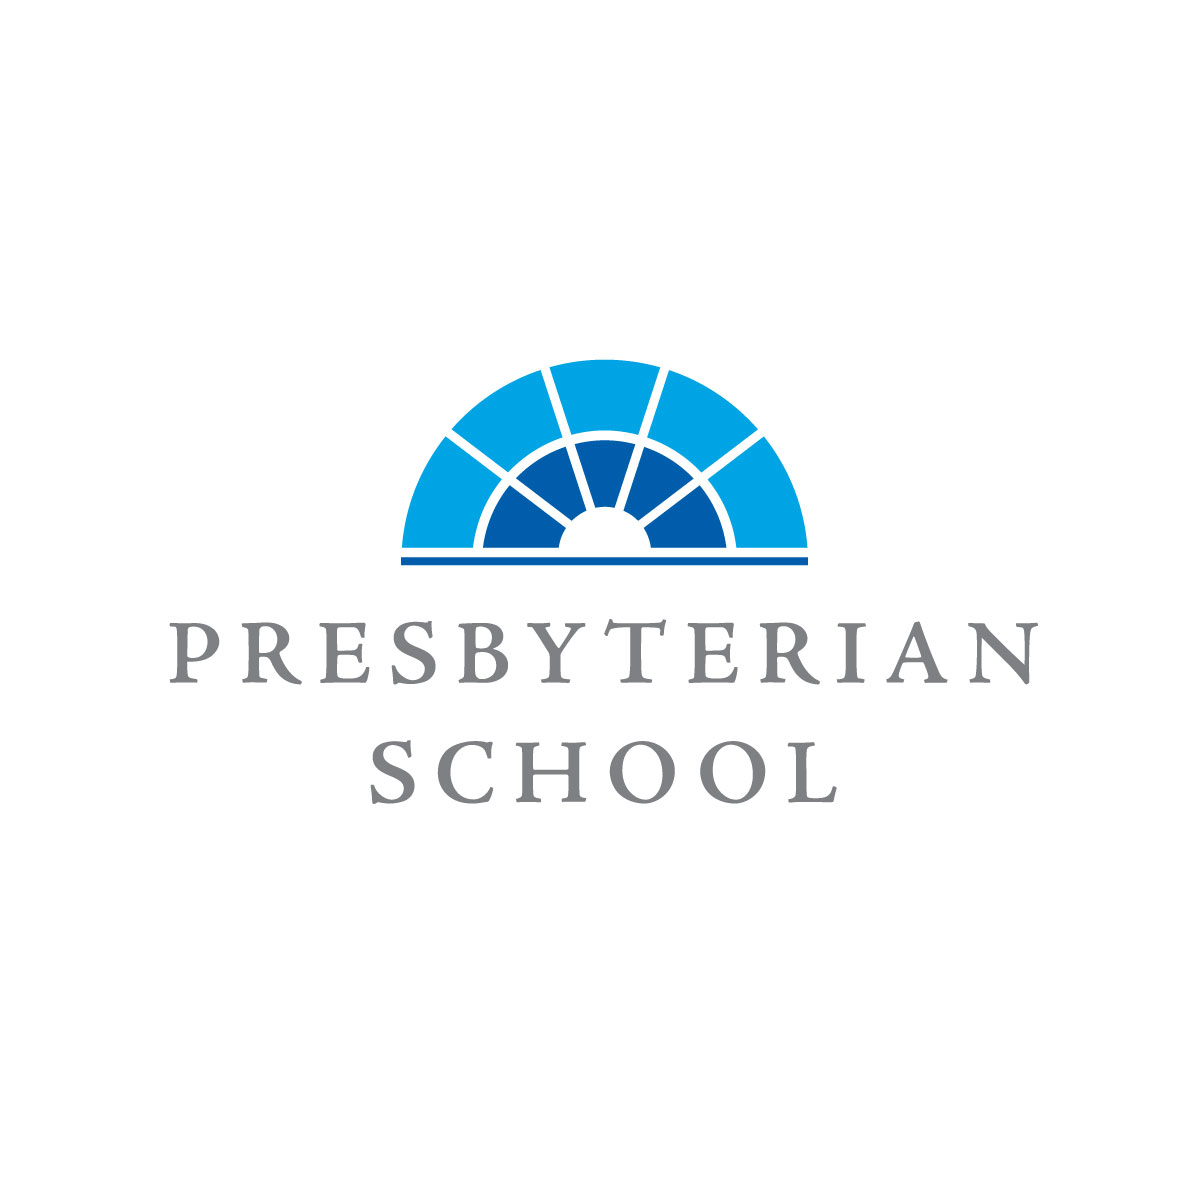 Presbyterian School